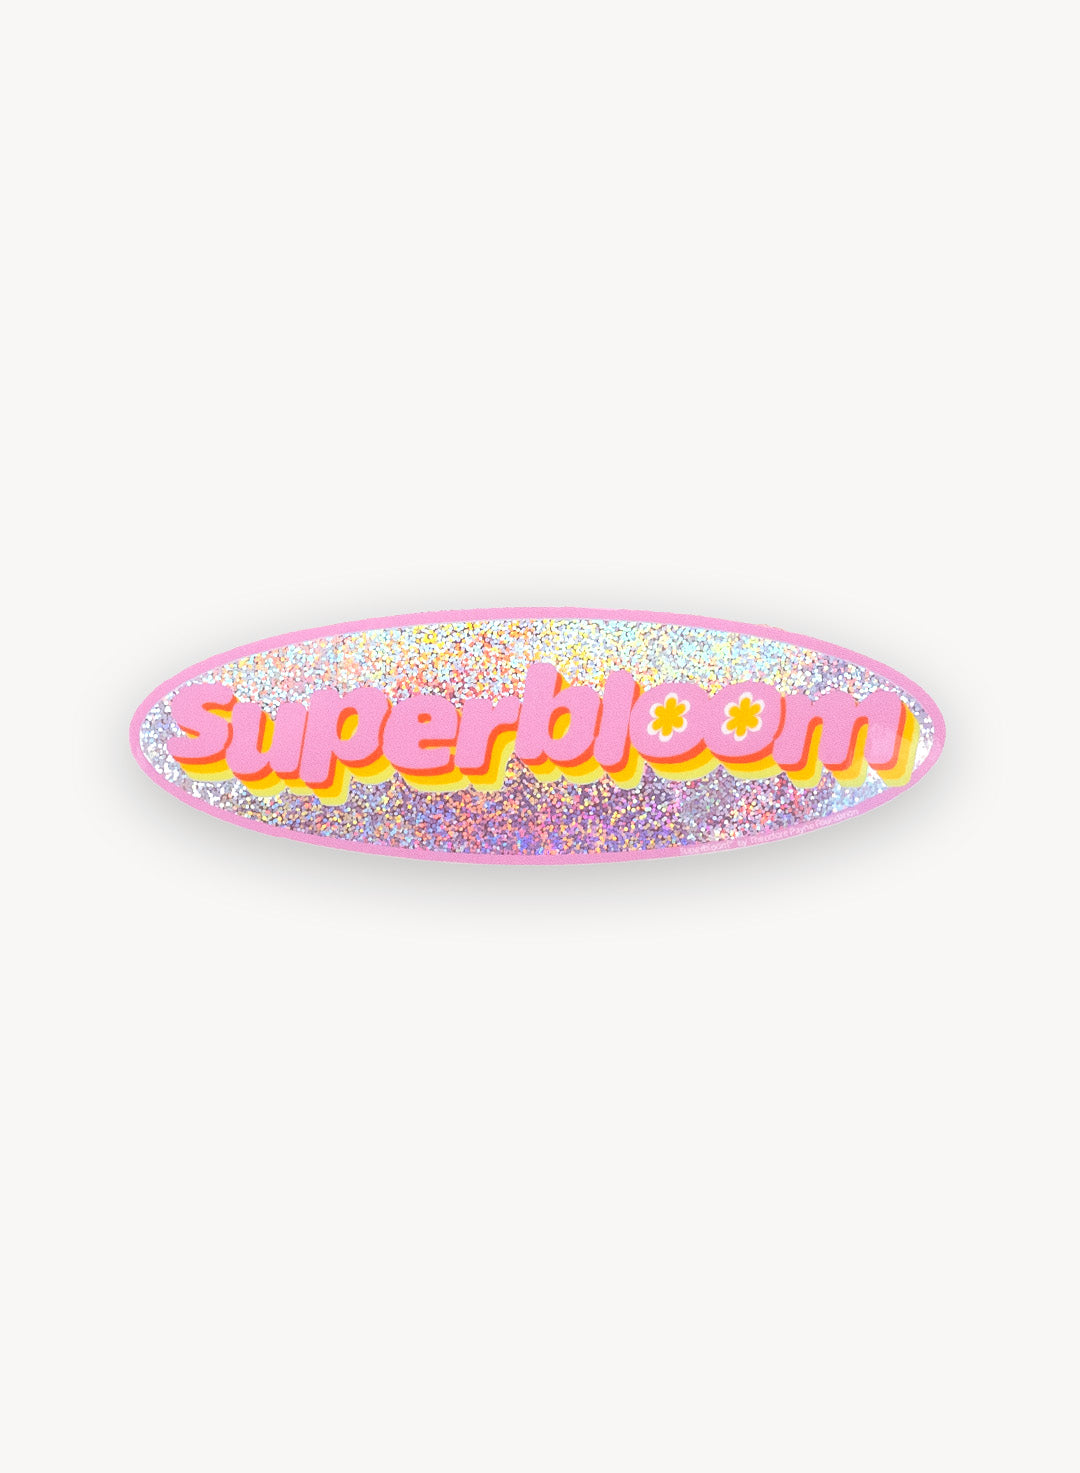 Superbloom Glitter Sticker